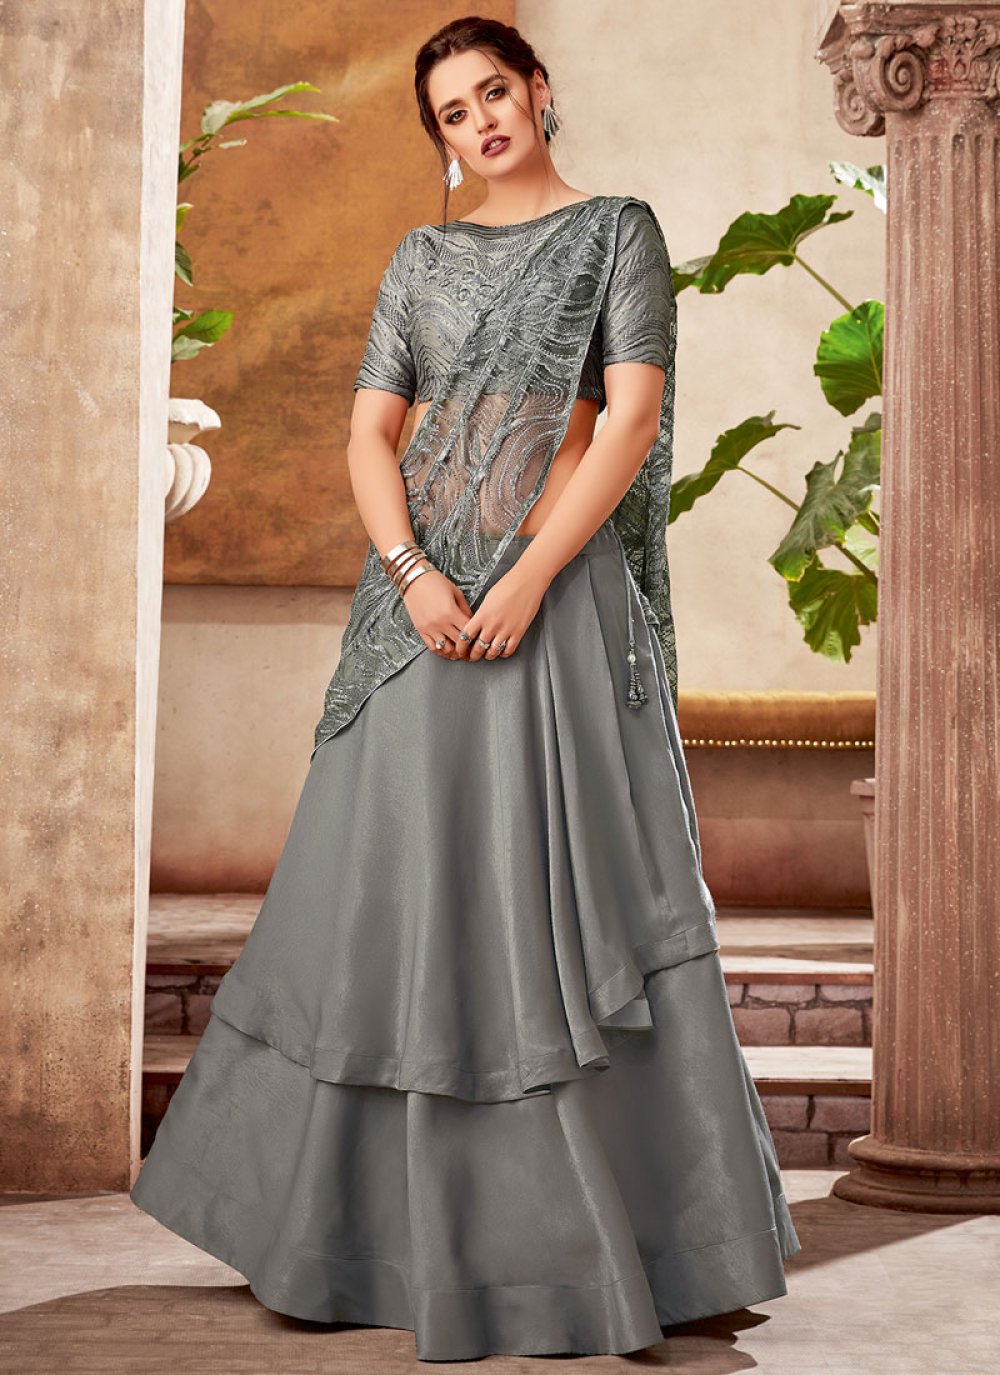 Navratri Multi Color Mirror Lehenga Choli Indian Lengha Chunri Skirt Top  Saree | eBay